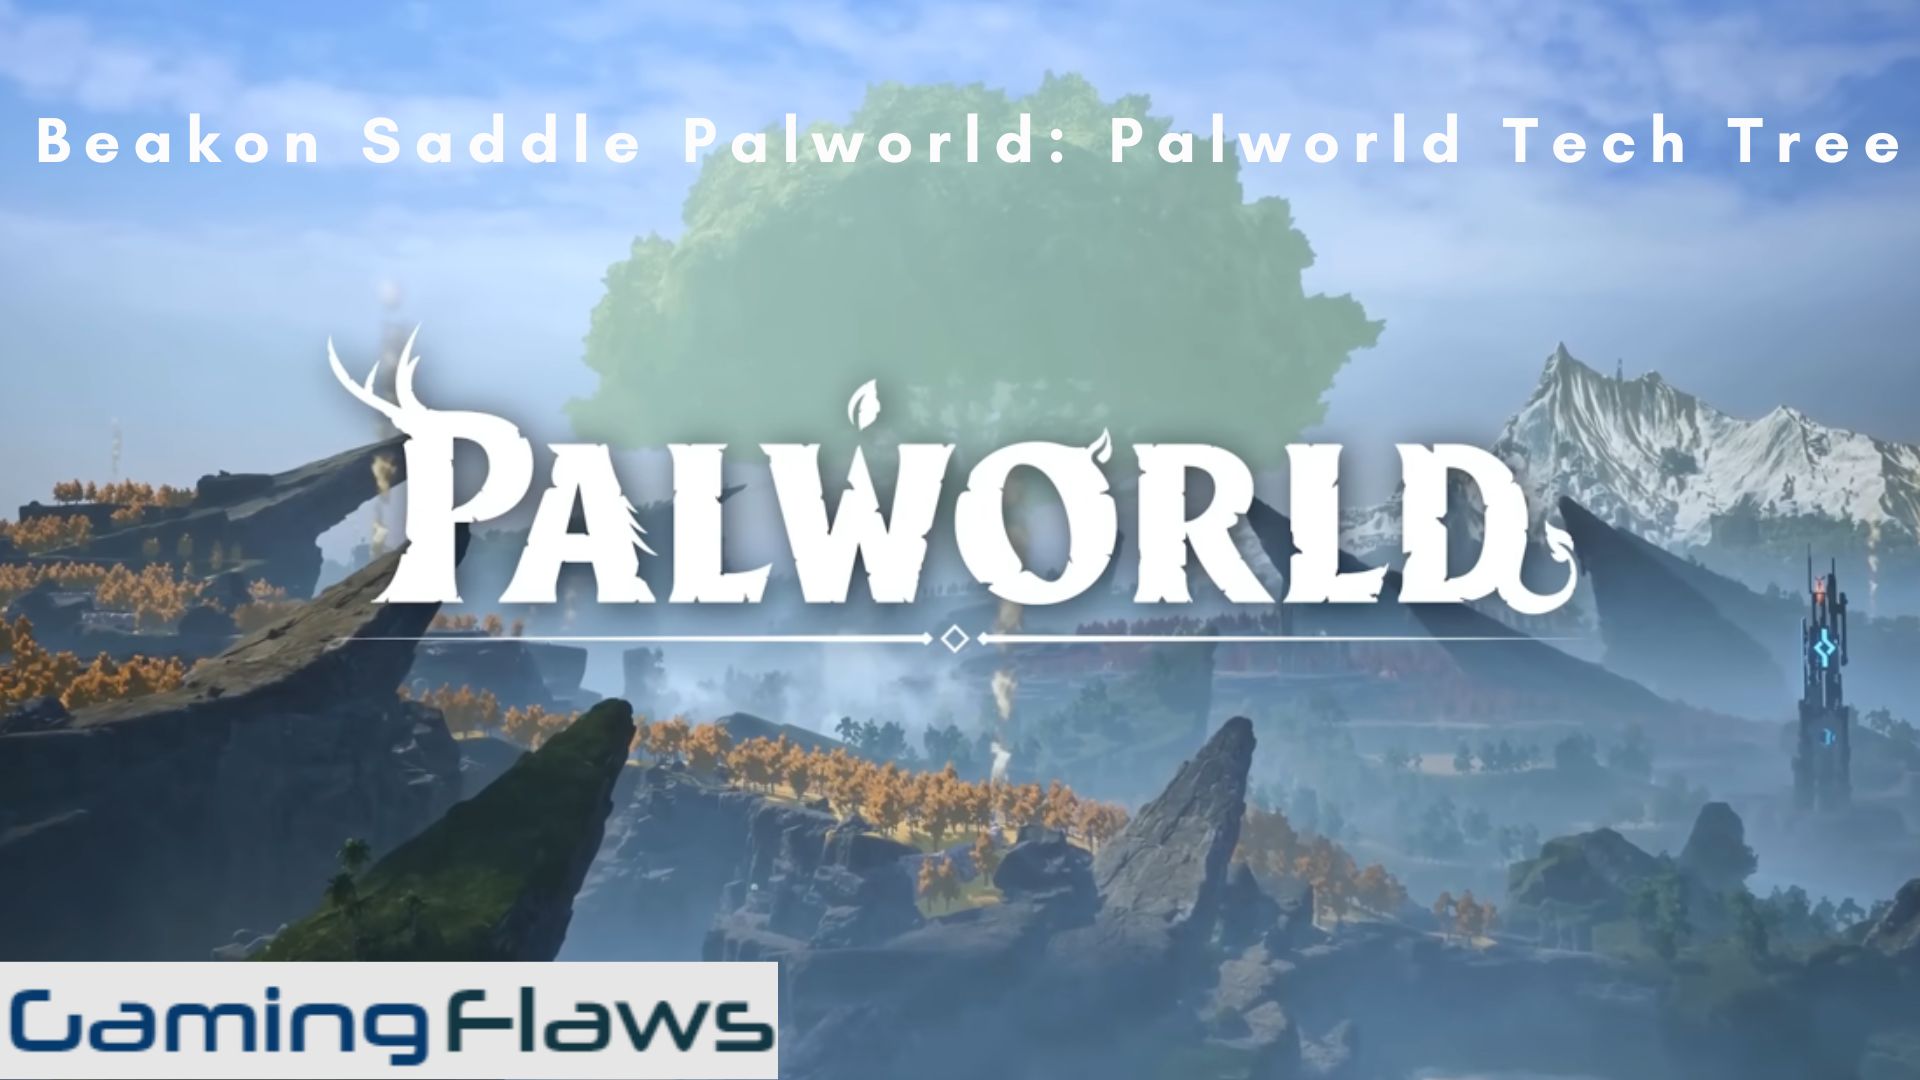 Palworld Tech Tree